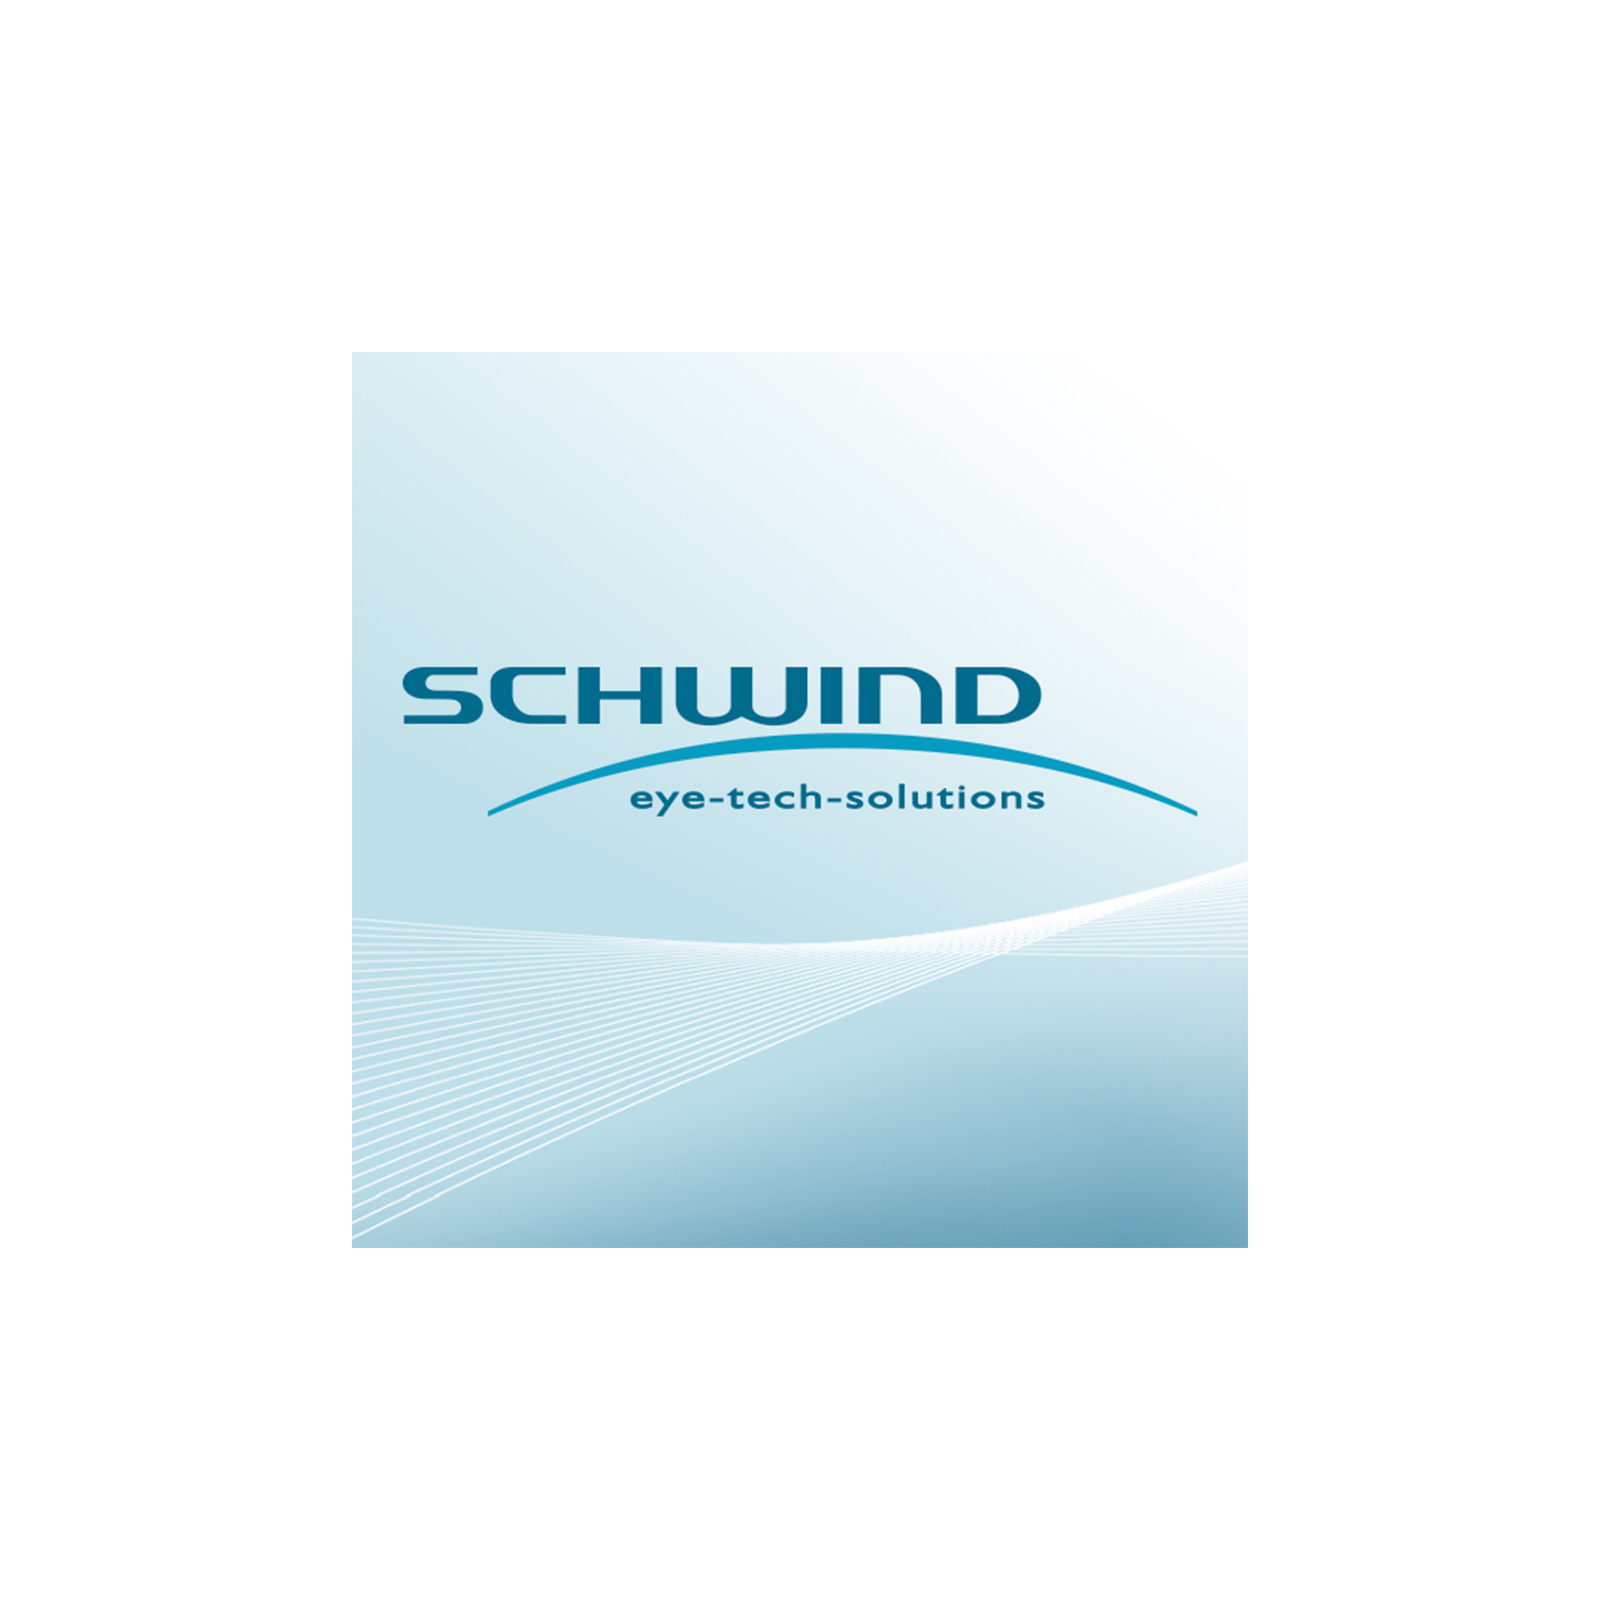 Schwind eye-tech-solutions GmbH [32005]